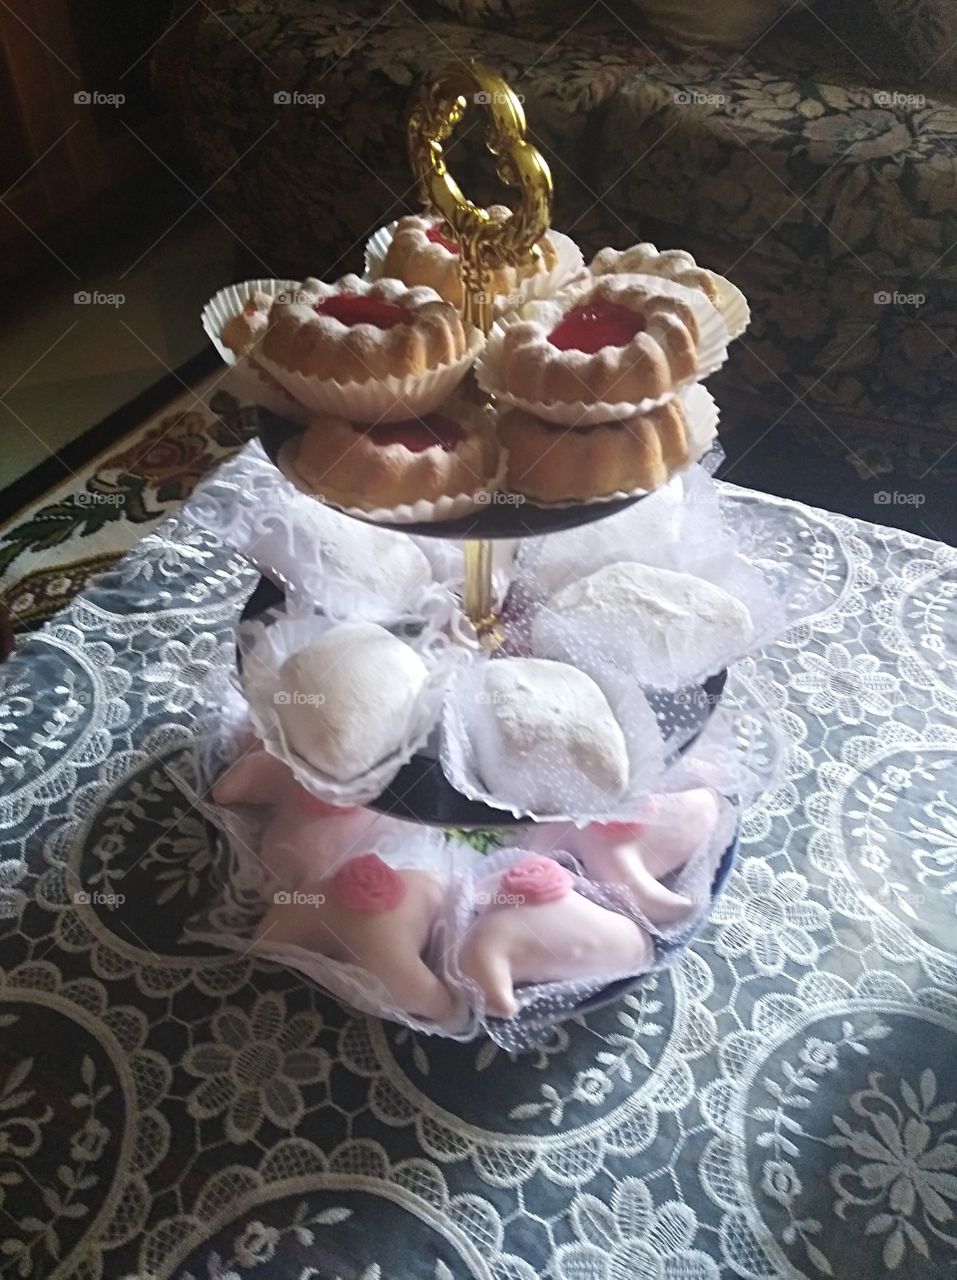 Traditional Algerian holiday cakes